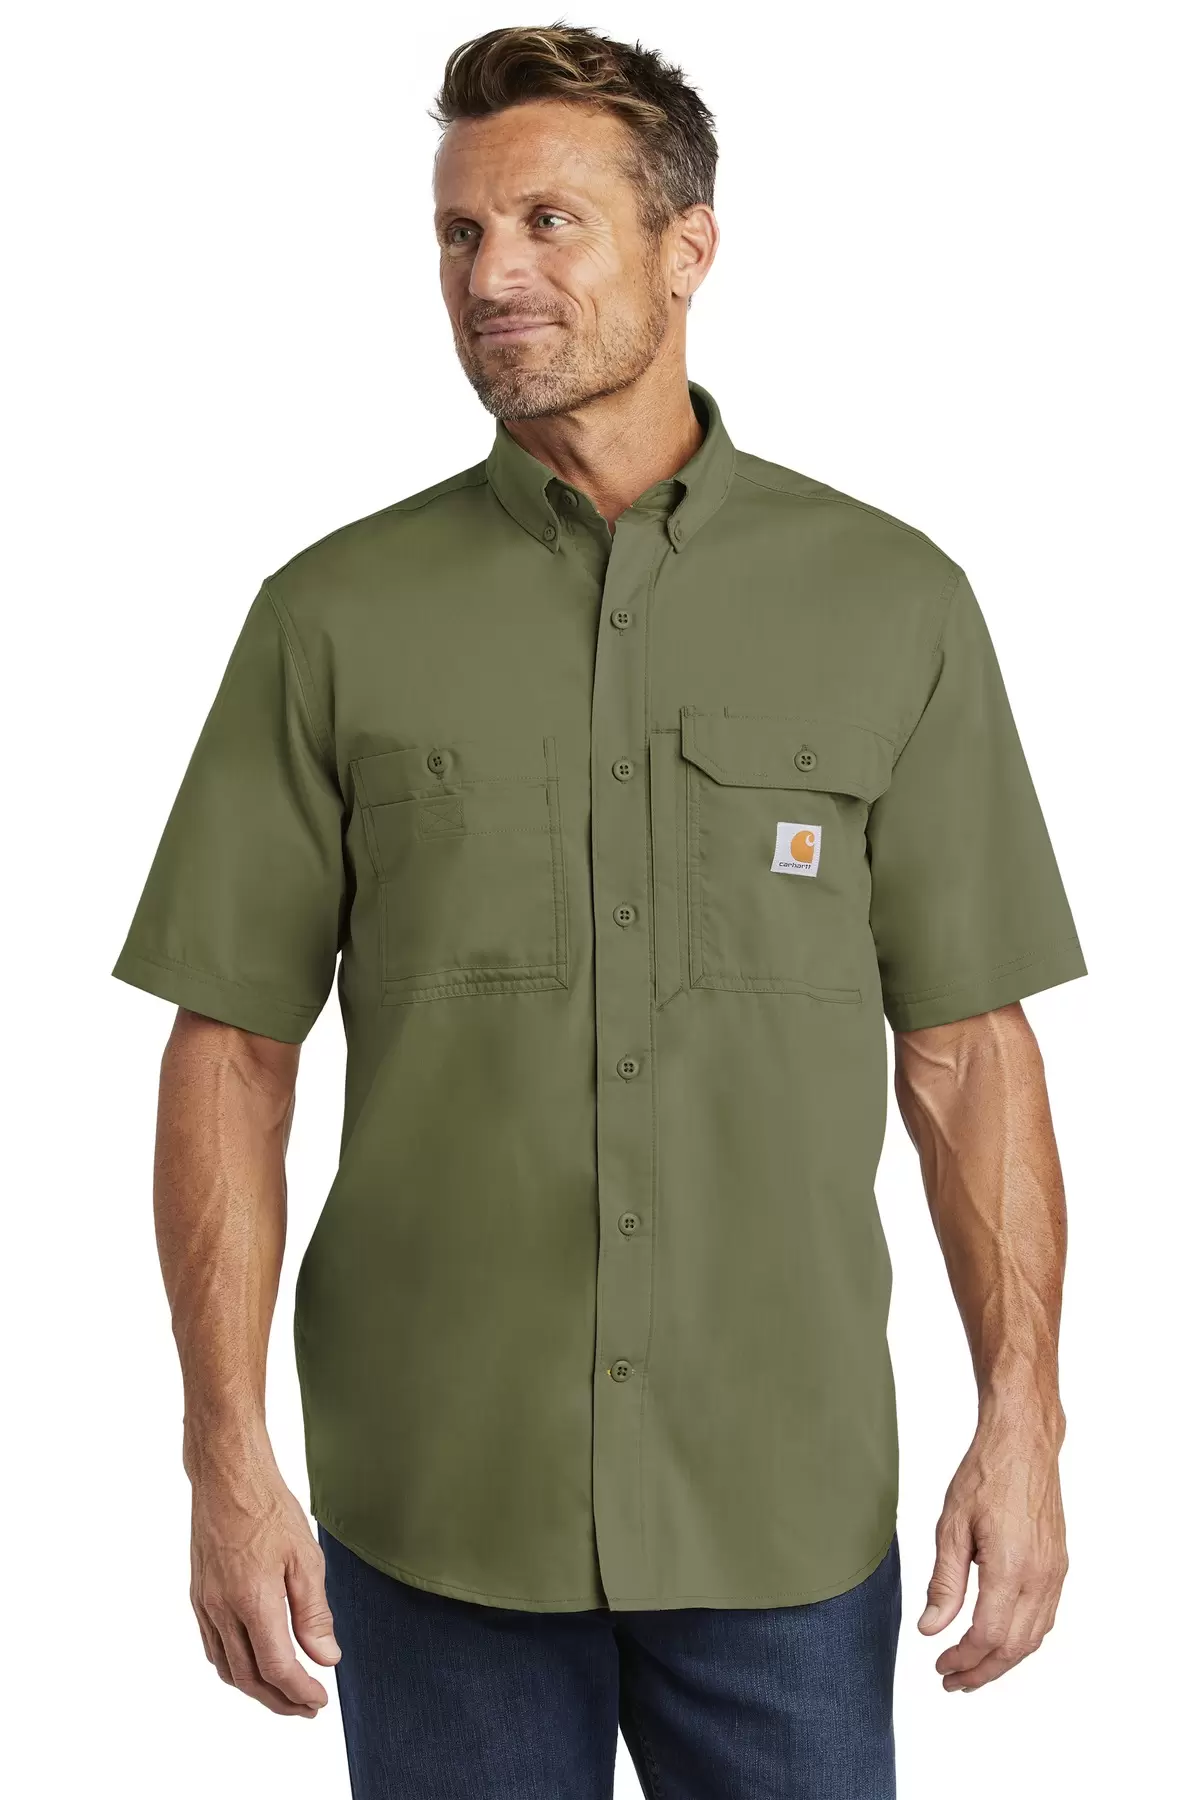 CARHARTT 102417 Carhartt Force Ridgefield Solid Short Sleeve Shirt